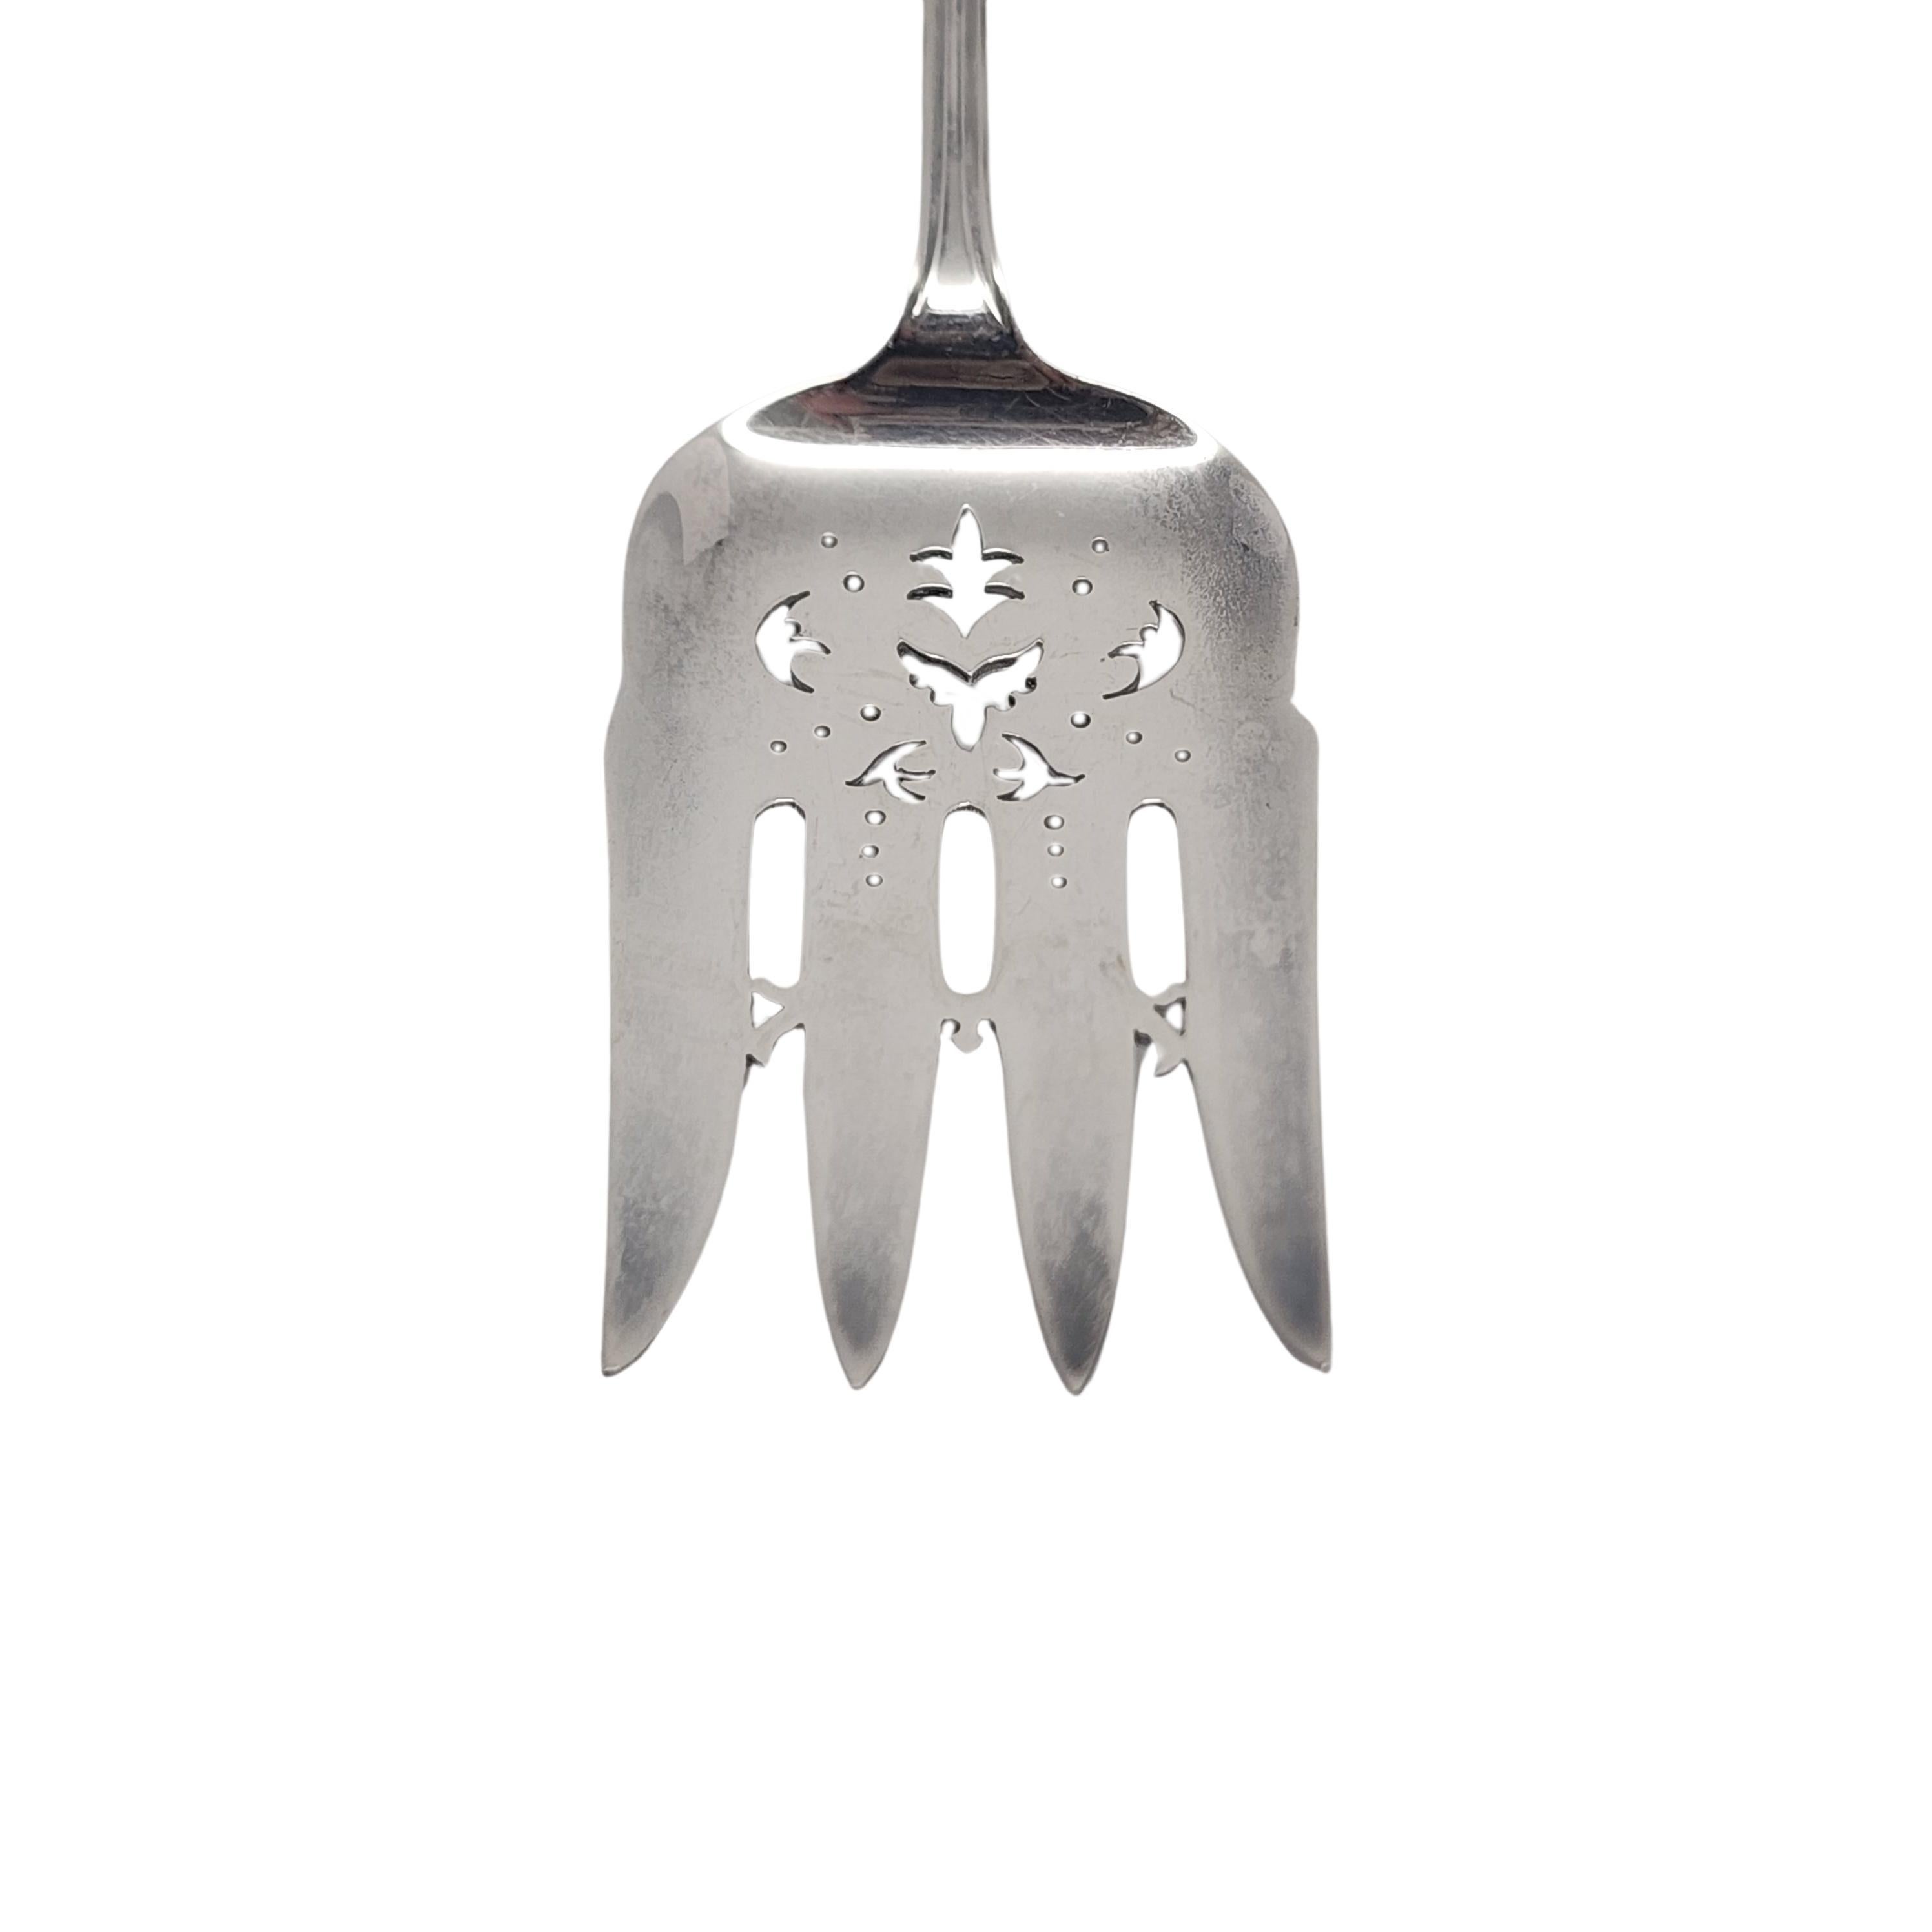 Women's or Men's Dominick & Haff JE Caldwell Priscilla Sterling Silver Serving Fork w/mono #15600 For Sale